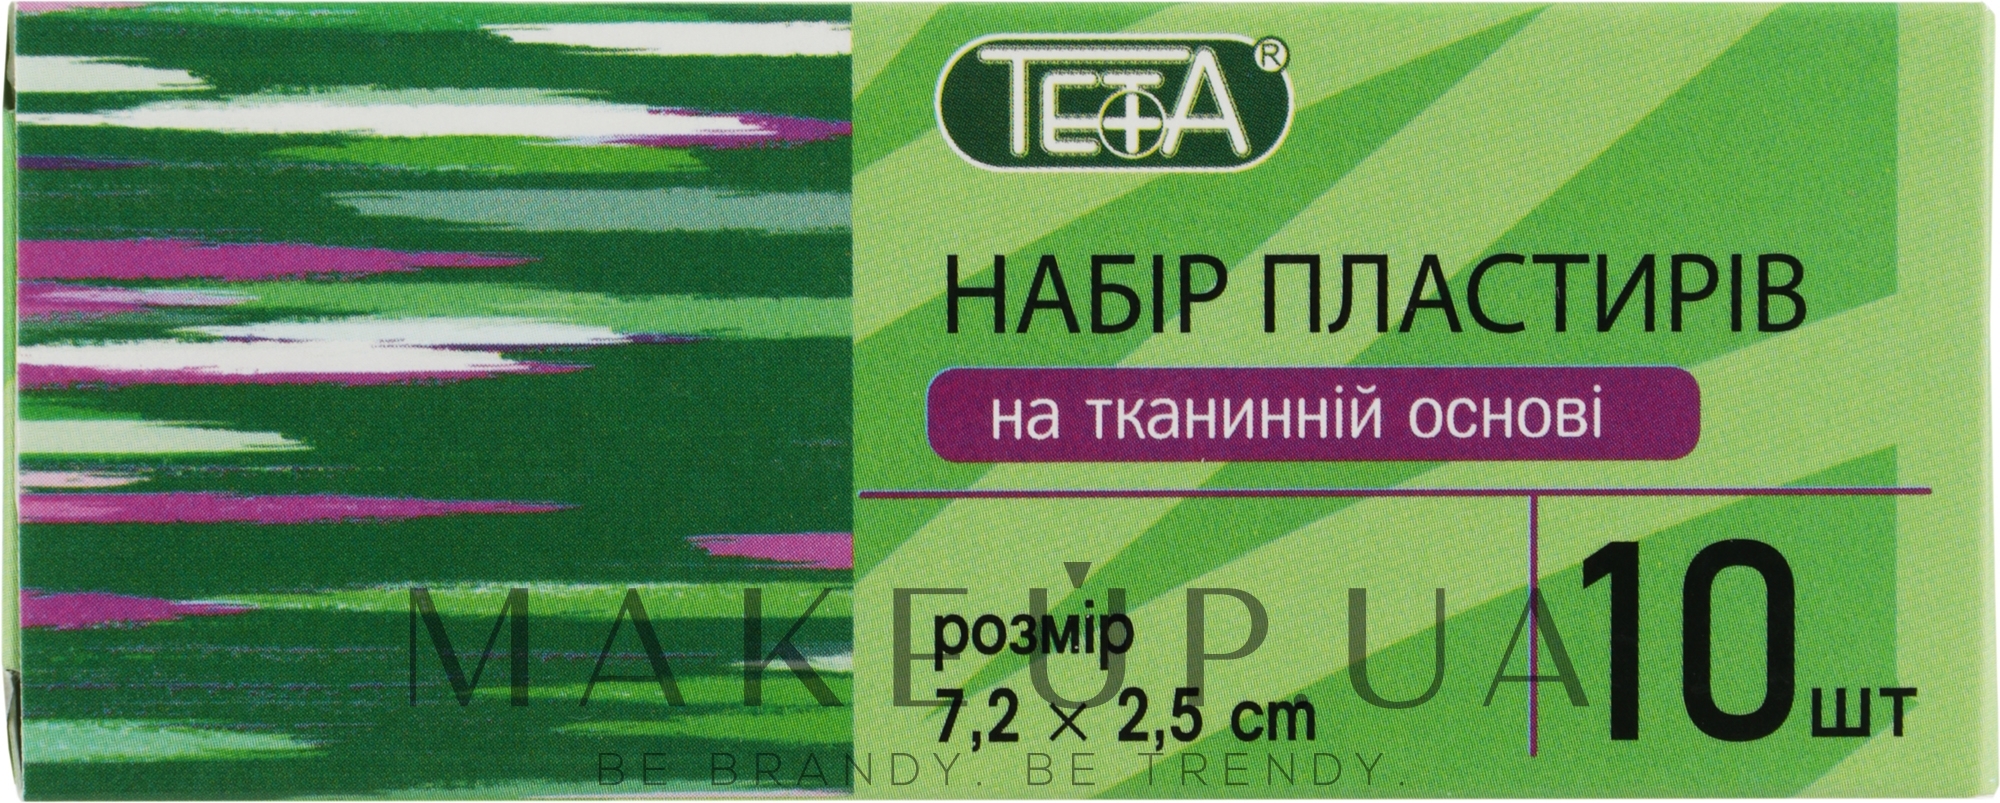 Набор пластырей на тканевой основе 7,2х2,5 см - Teta — фото 10шт